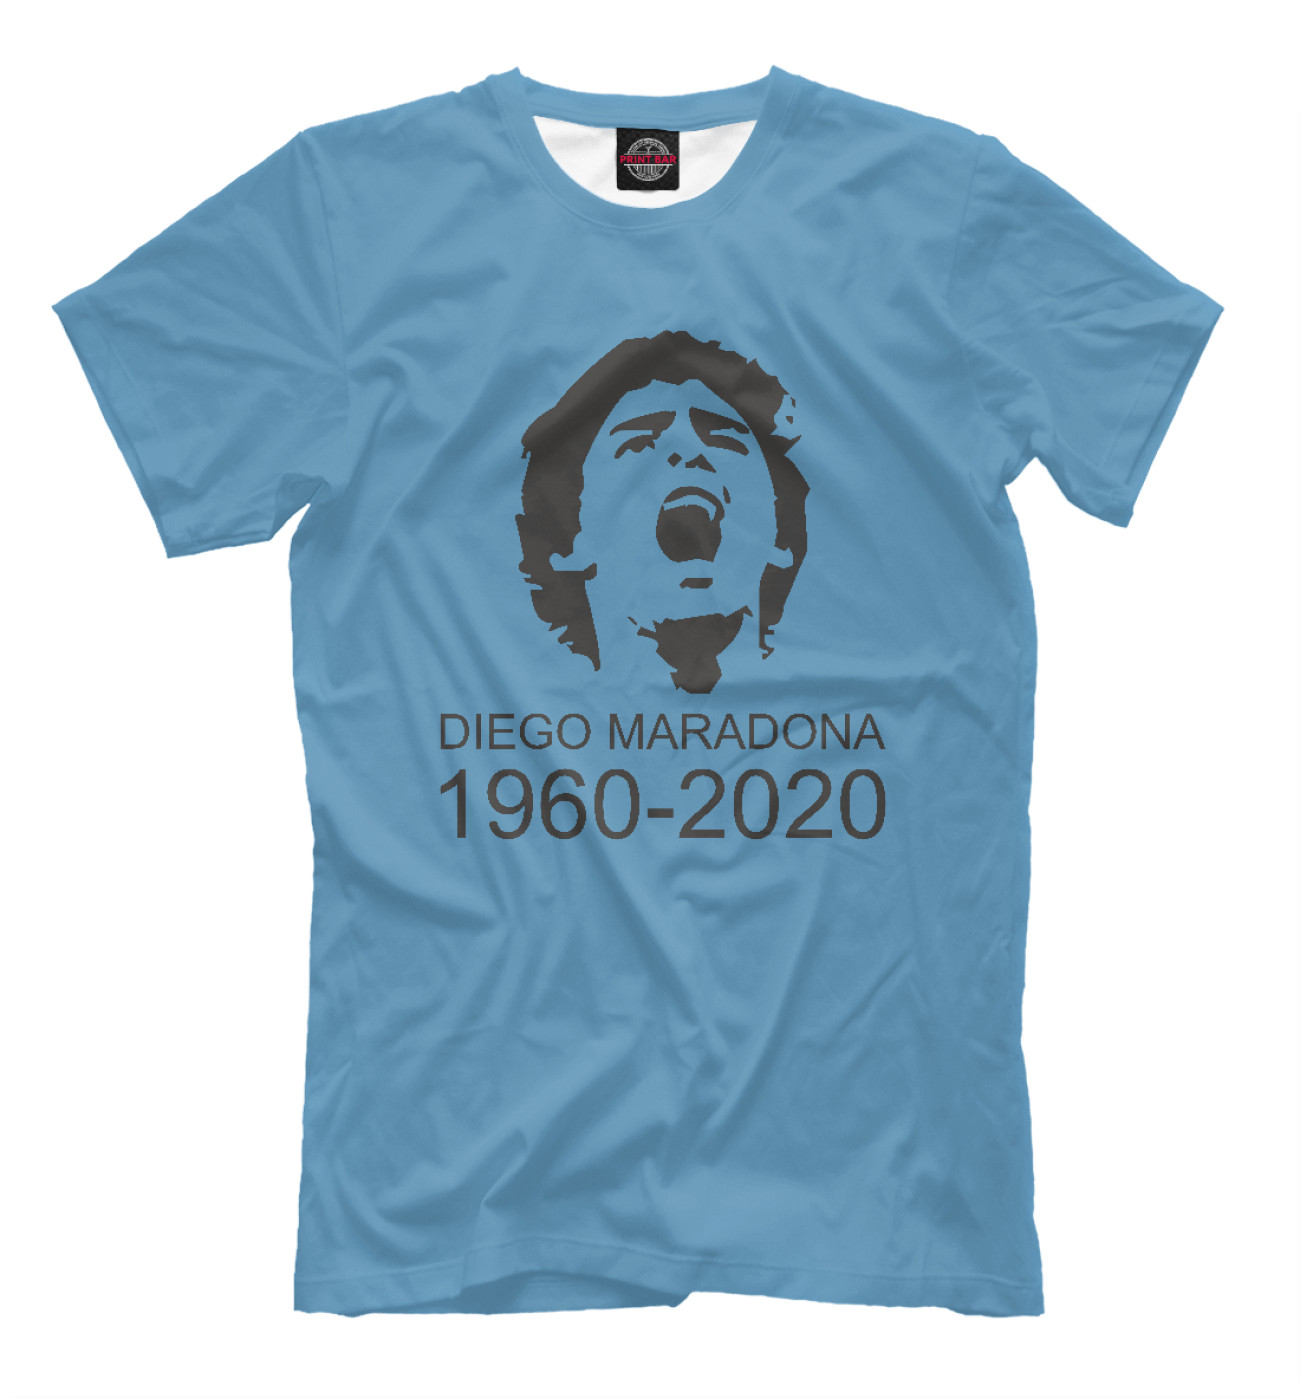 Мужская Футболка Диего Марадона, артикул: FLT-355097-fut-2